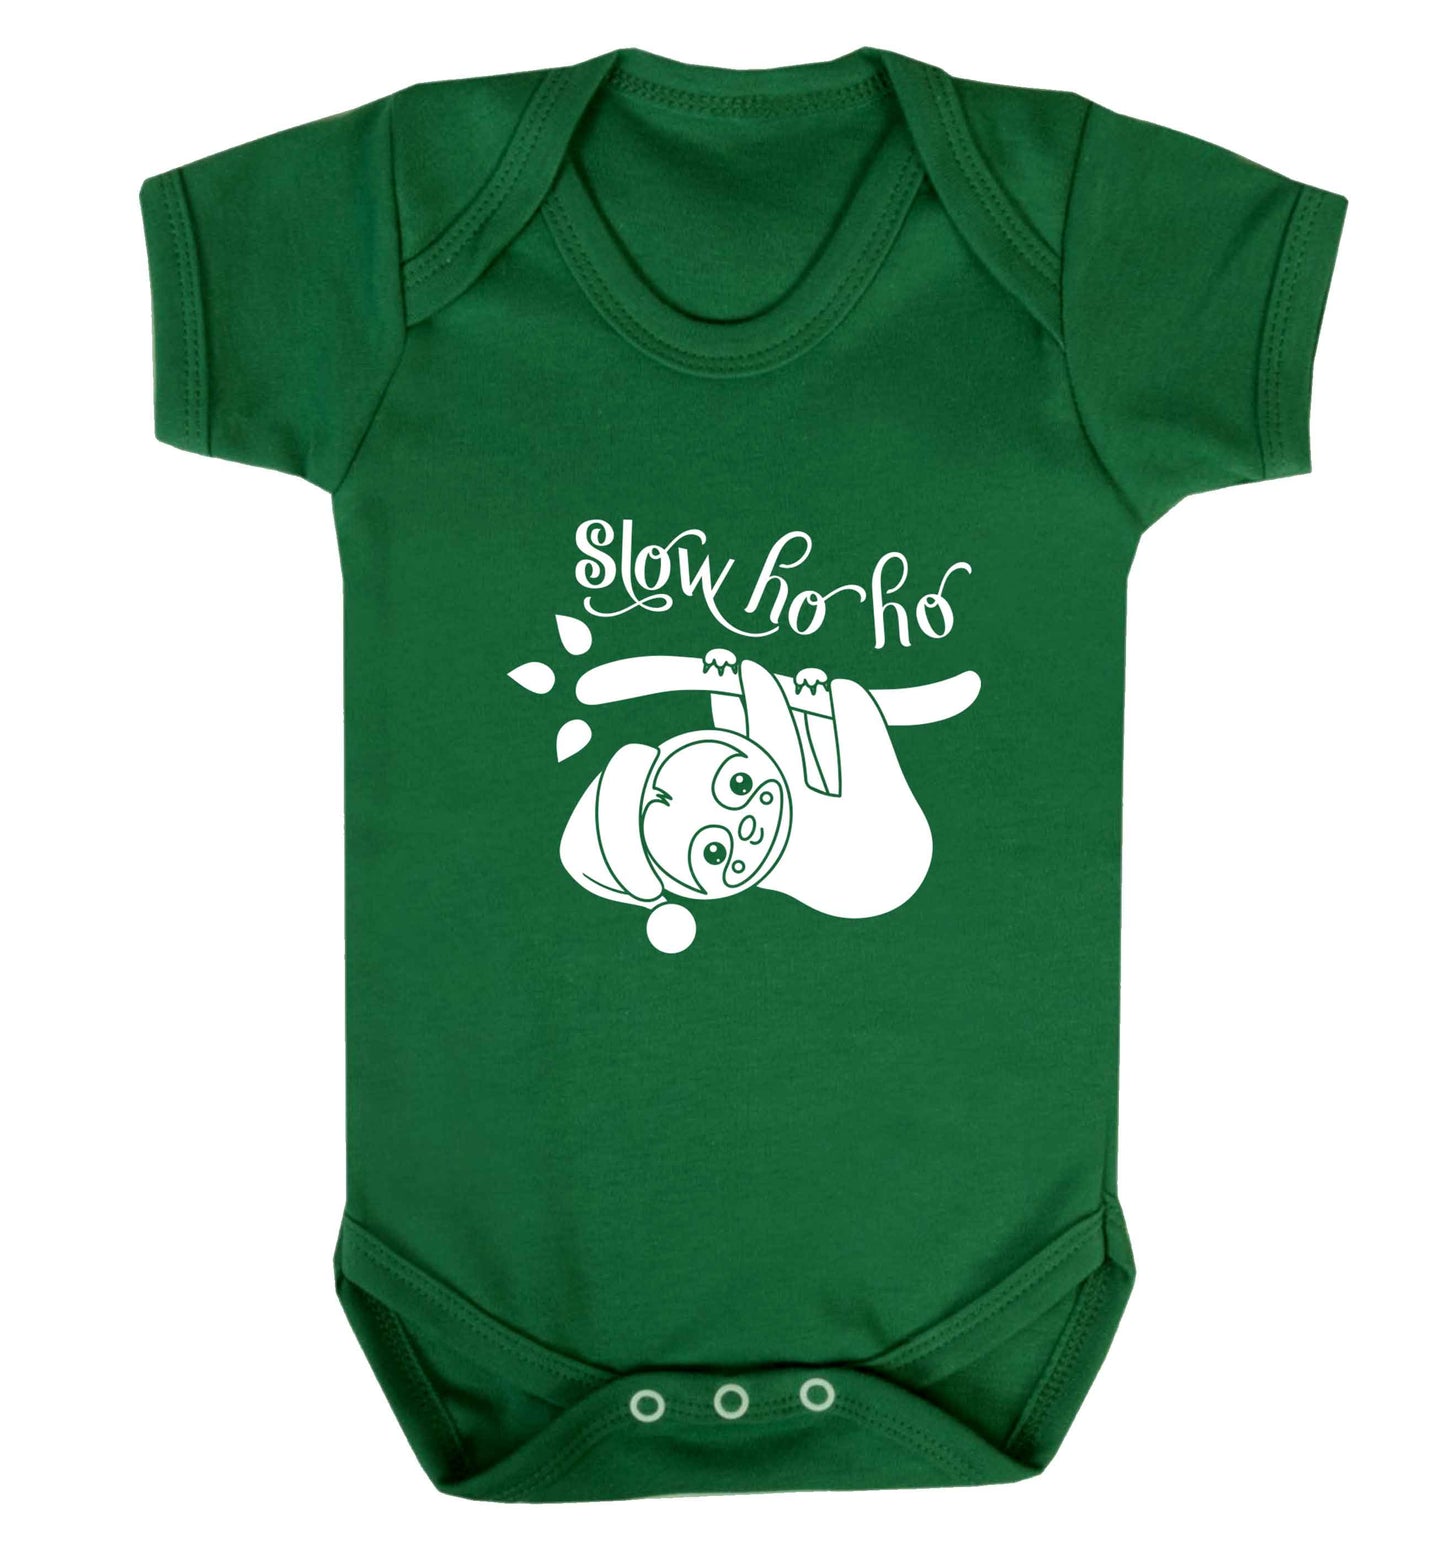 Slow Ho Ho baby vest green 18-24 months